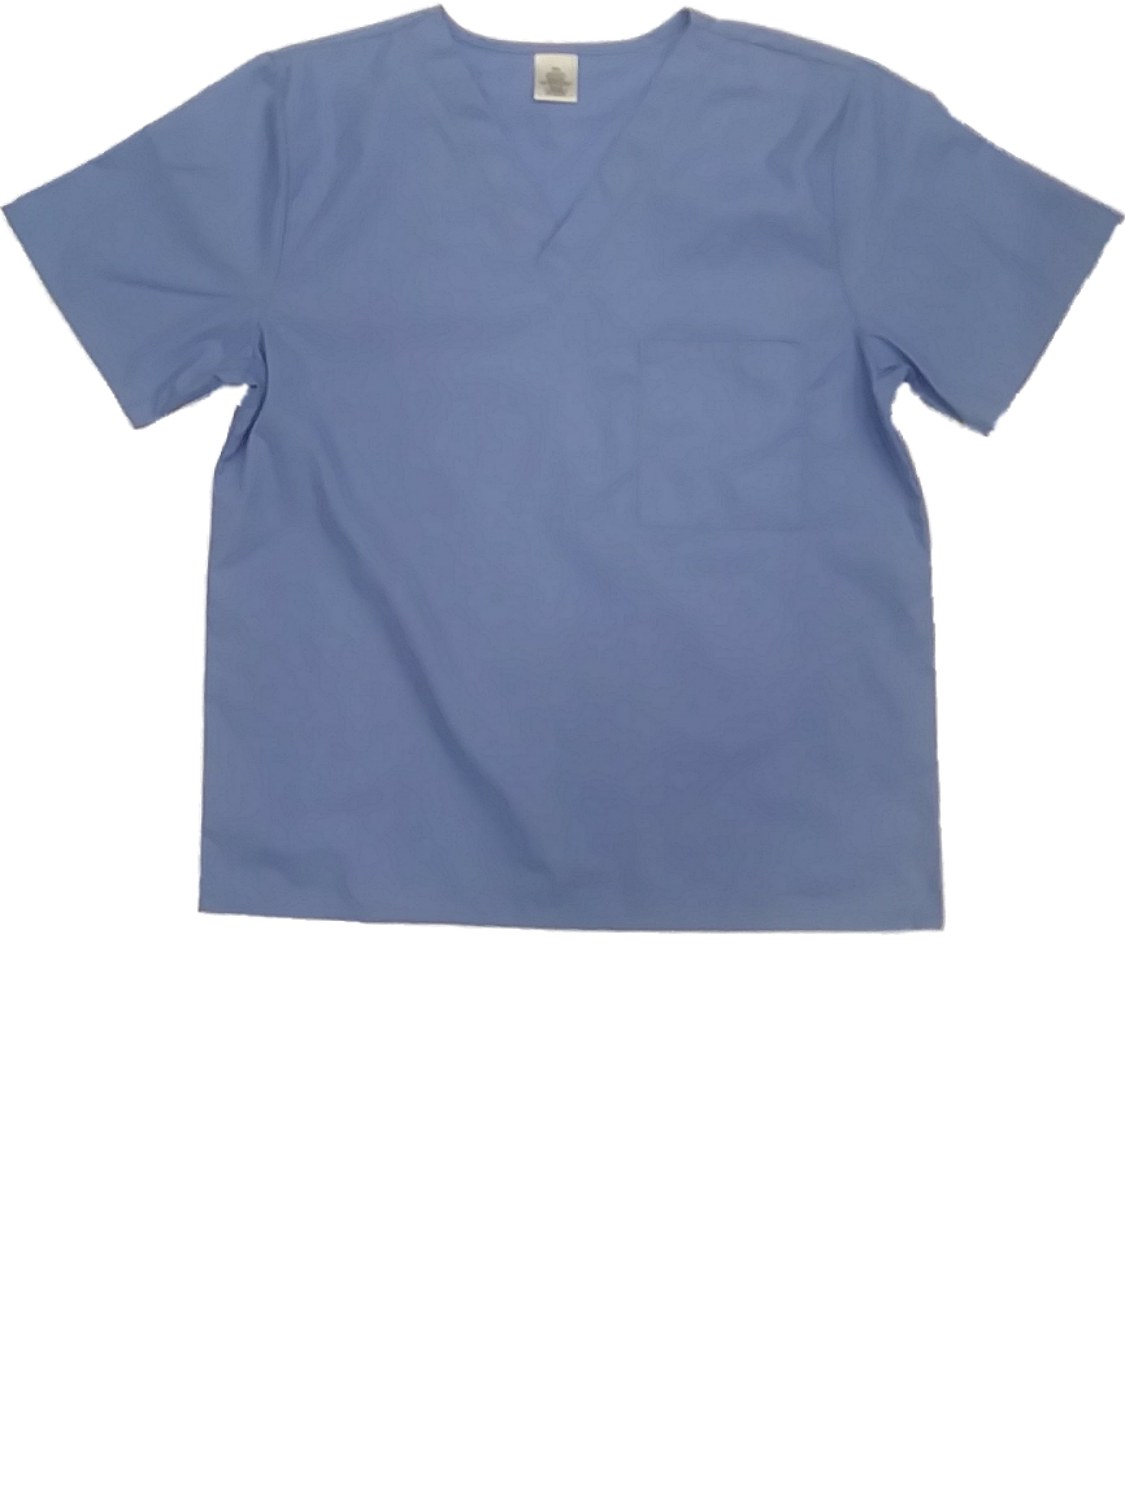 Medical Womens Plain Light Blue Medical Smock Nurse Scrubs Shirt Pocketed Top